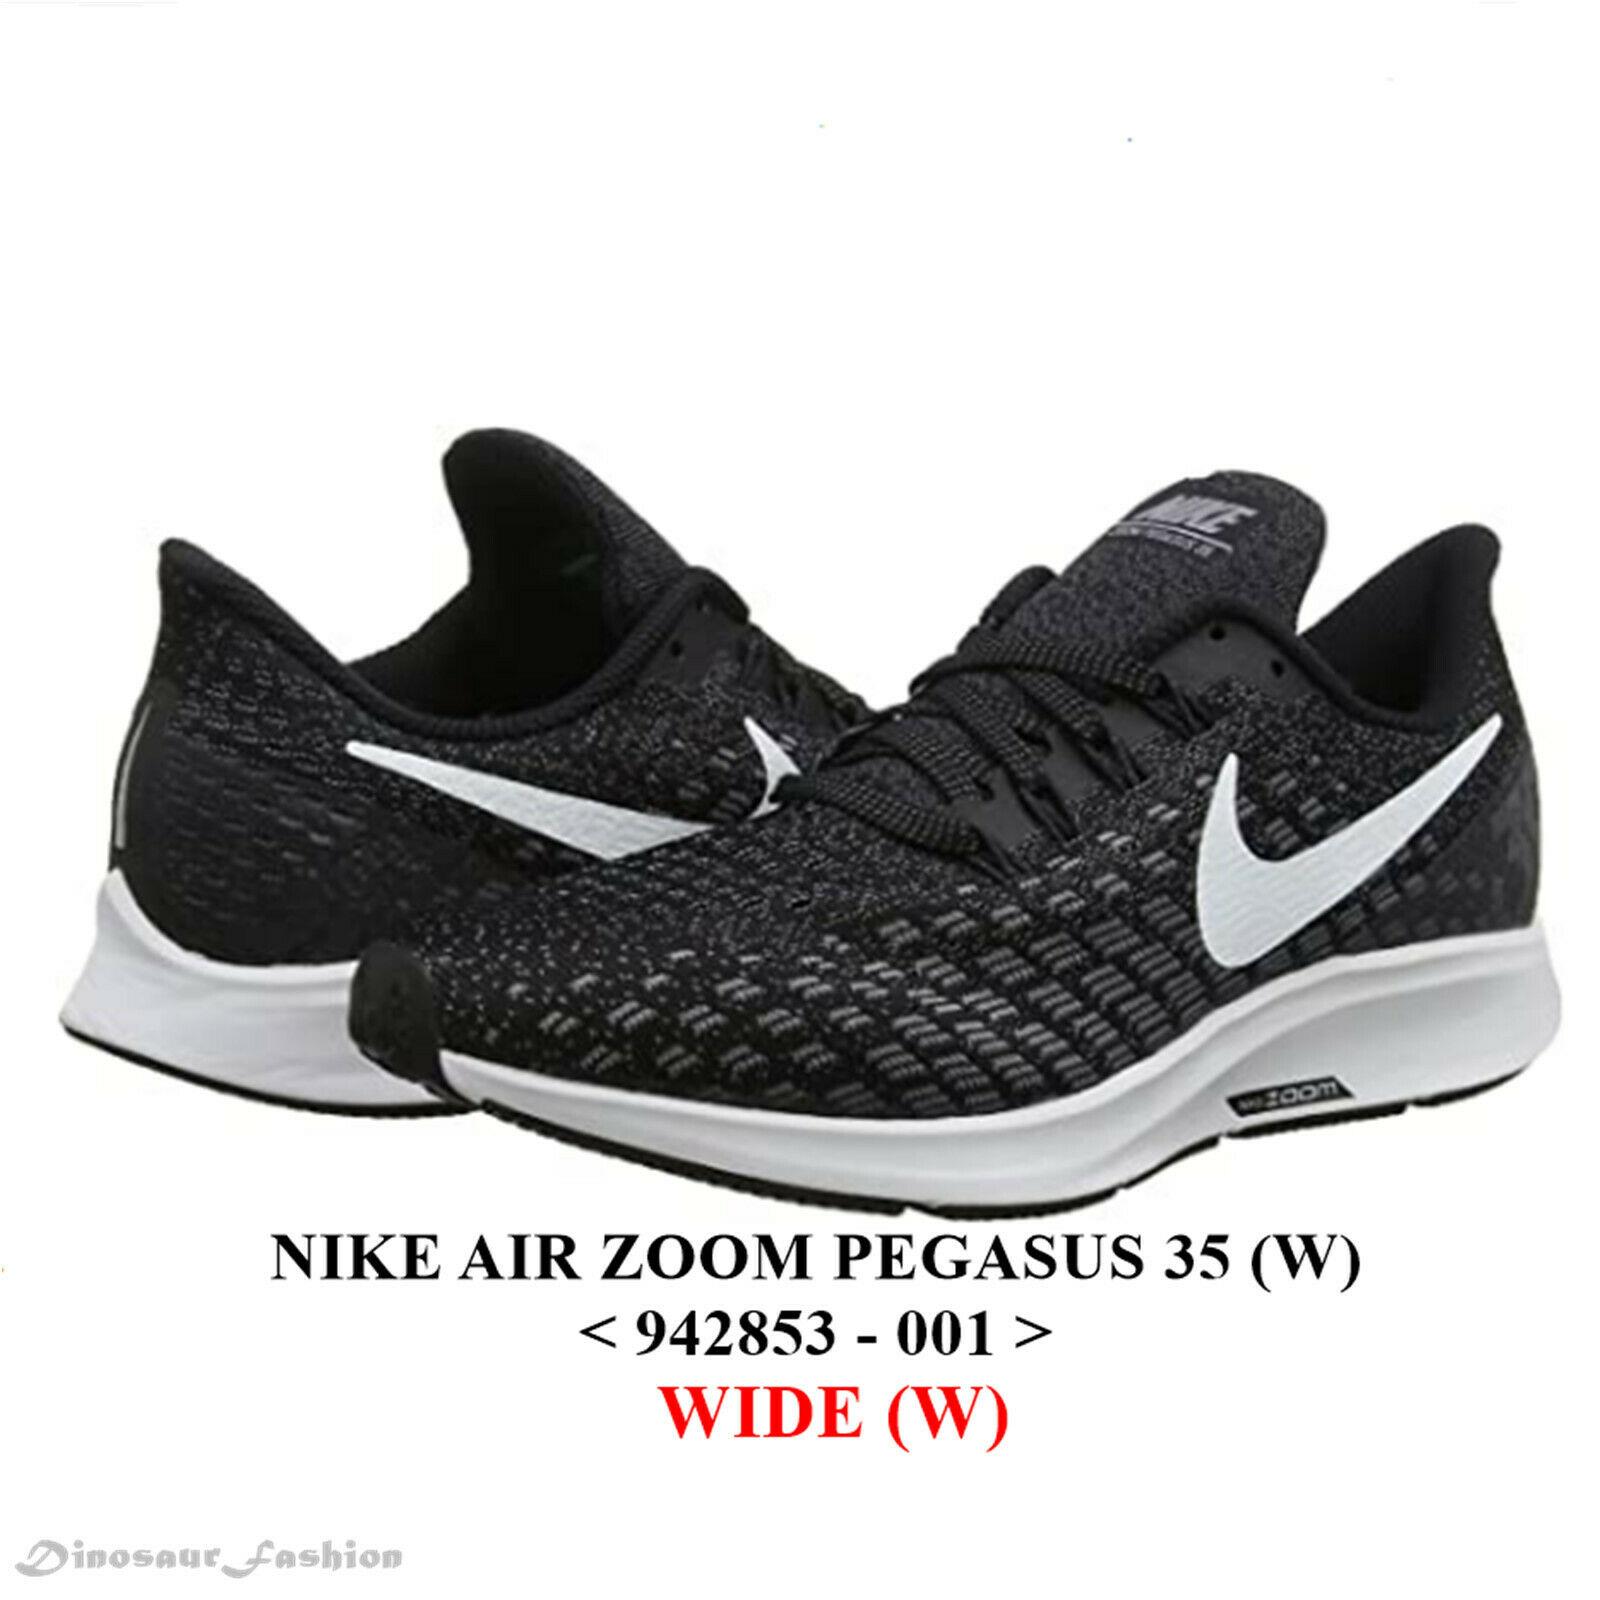 Nike Air Zoom Pegasus 35 W <942853 - 001>.Men`s Running Shoes .